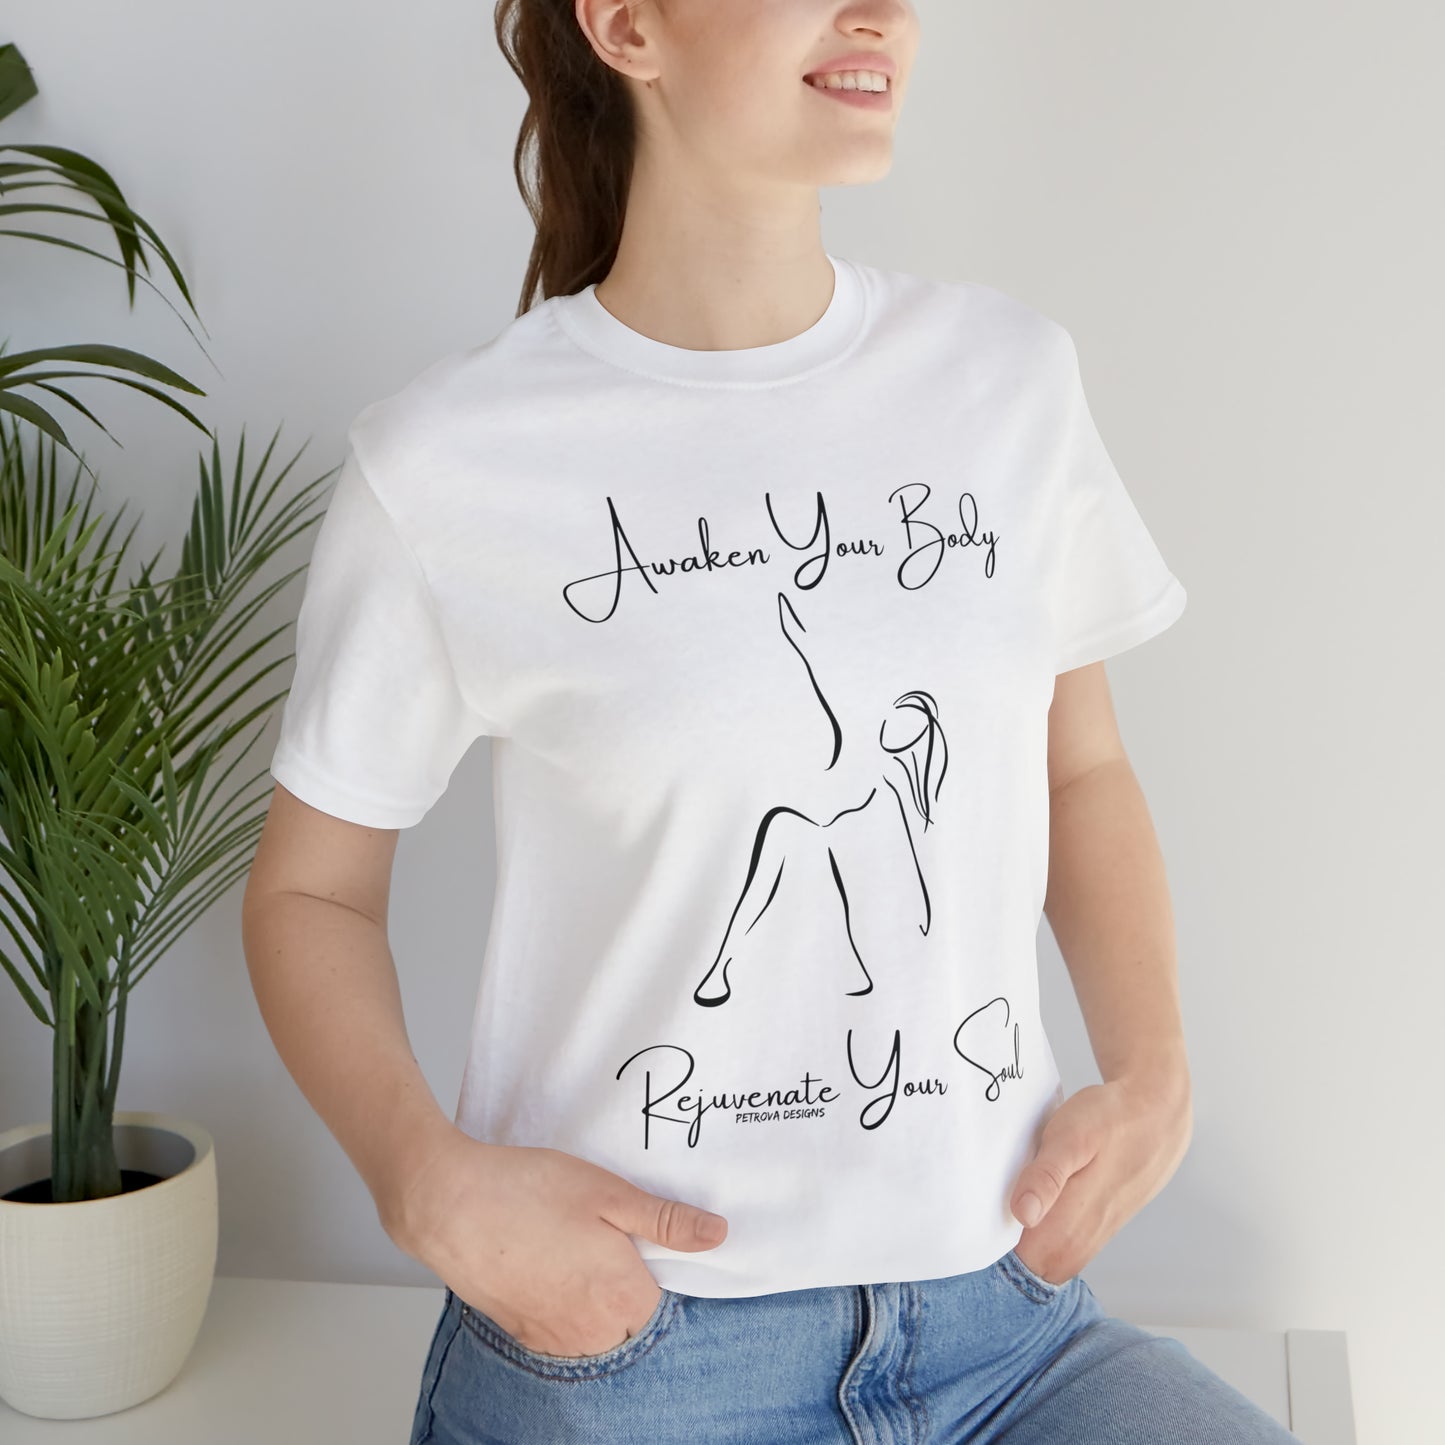 White T-Shirt Tshirt Design Gift for Friend and Family Short Sleeved Shirt Yoga Petrova Designs